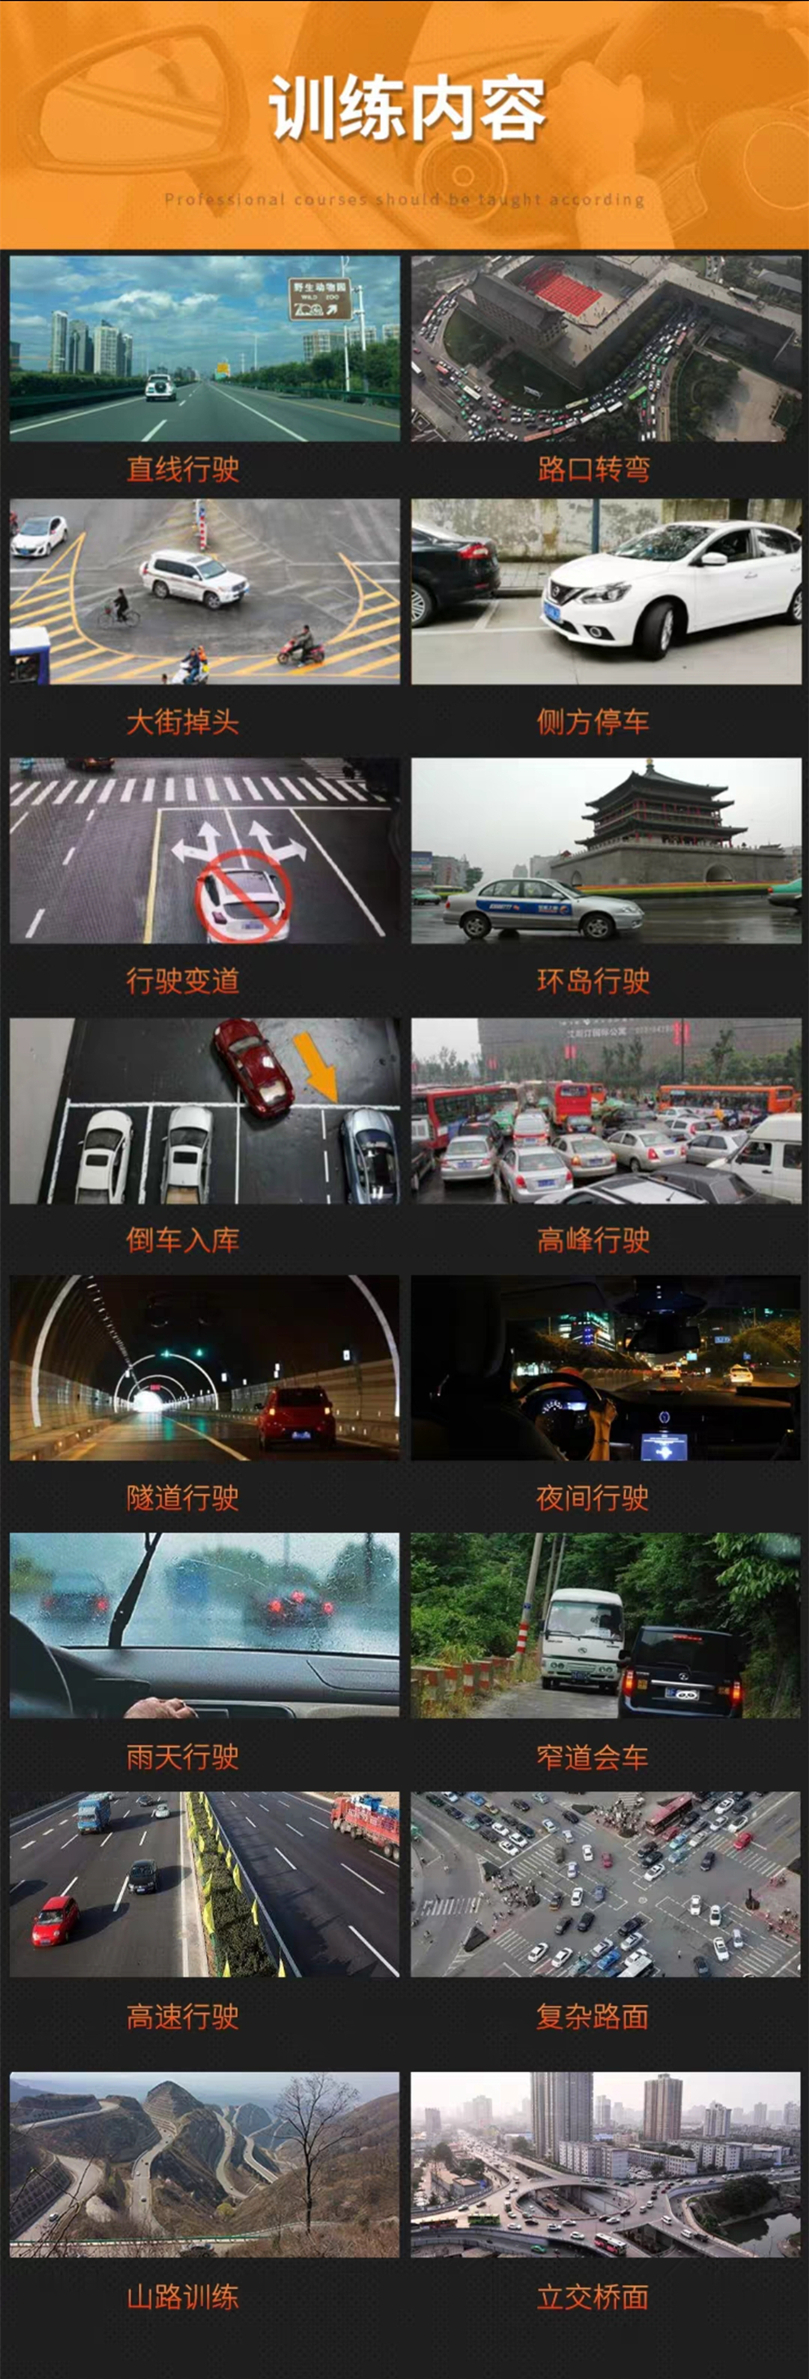 Screenshot_20190608_200041_com.taobao.taobao.jpg